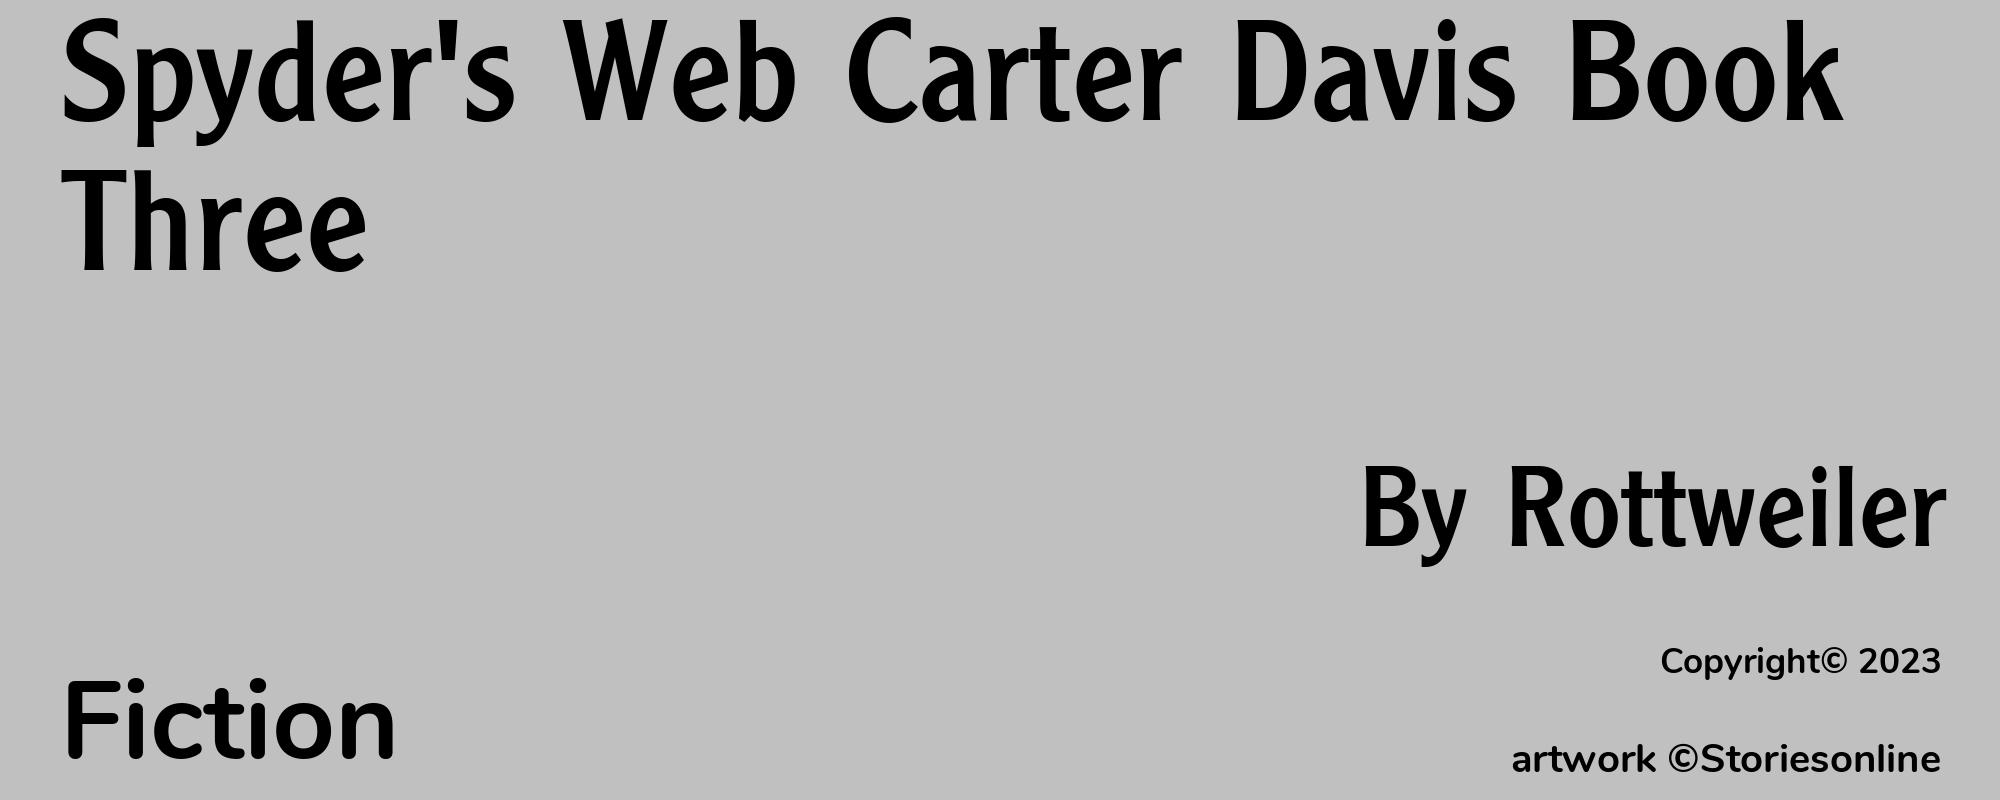 Spyder's Web Carter Davis Book Three - Cover